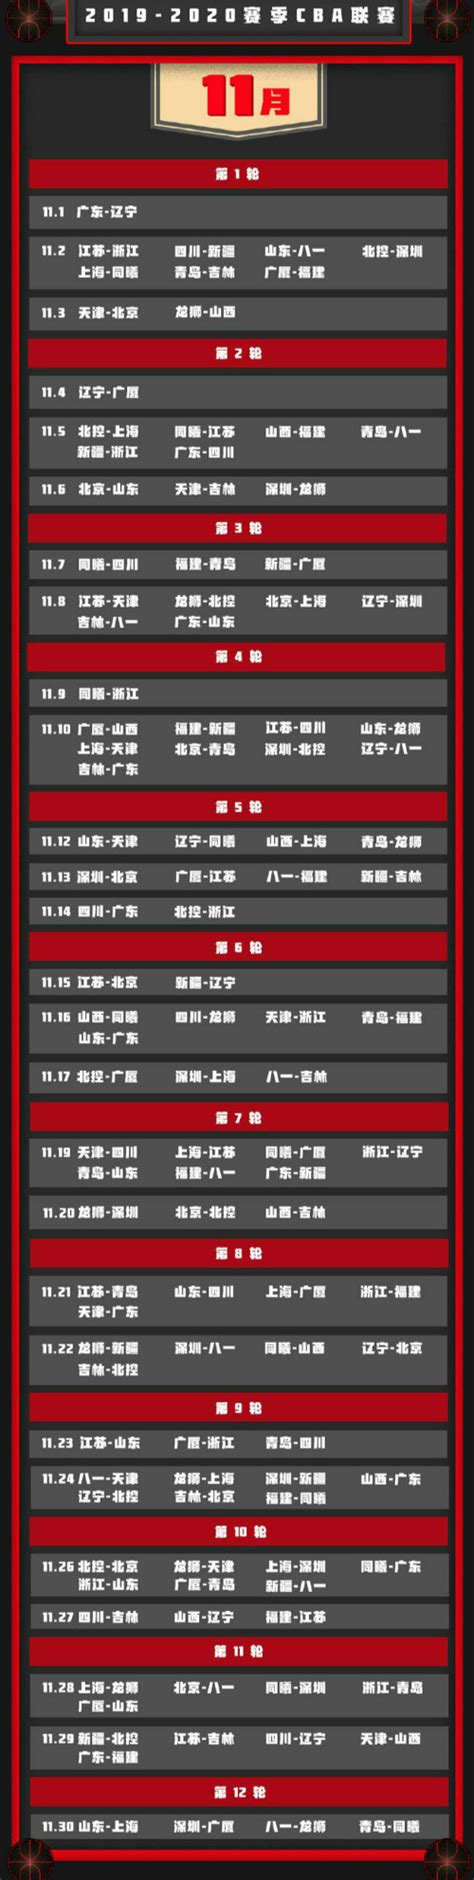 cba2019-2020新赛季赛程分组场次 cba男篮完整赛程时间安排表-闽南网